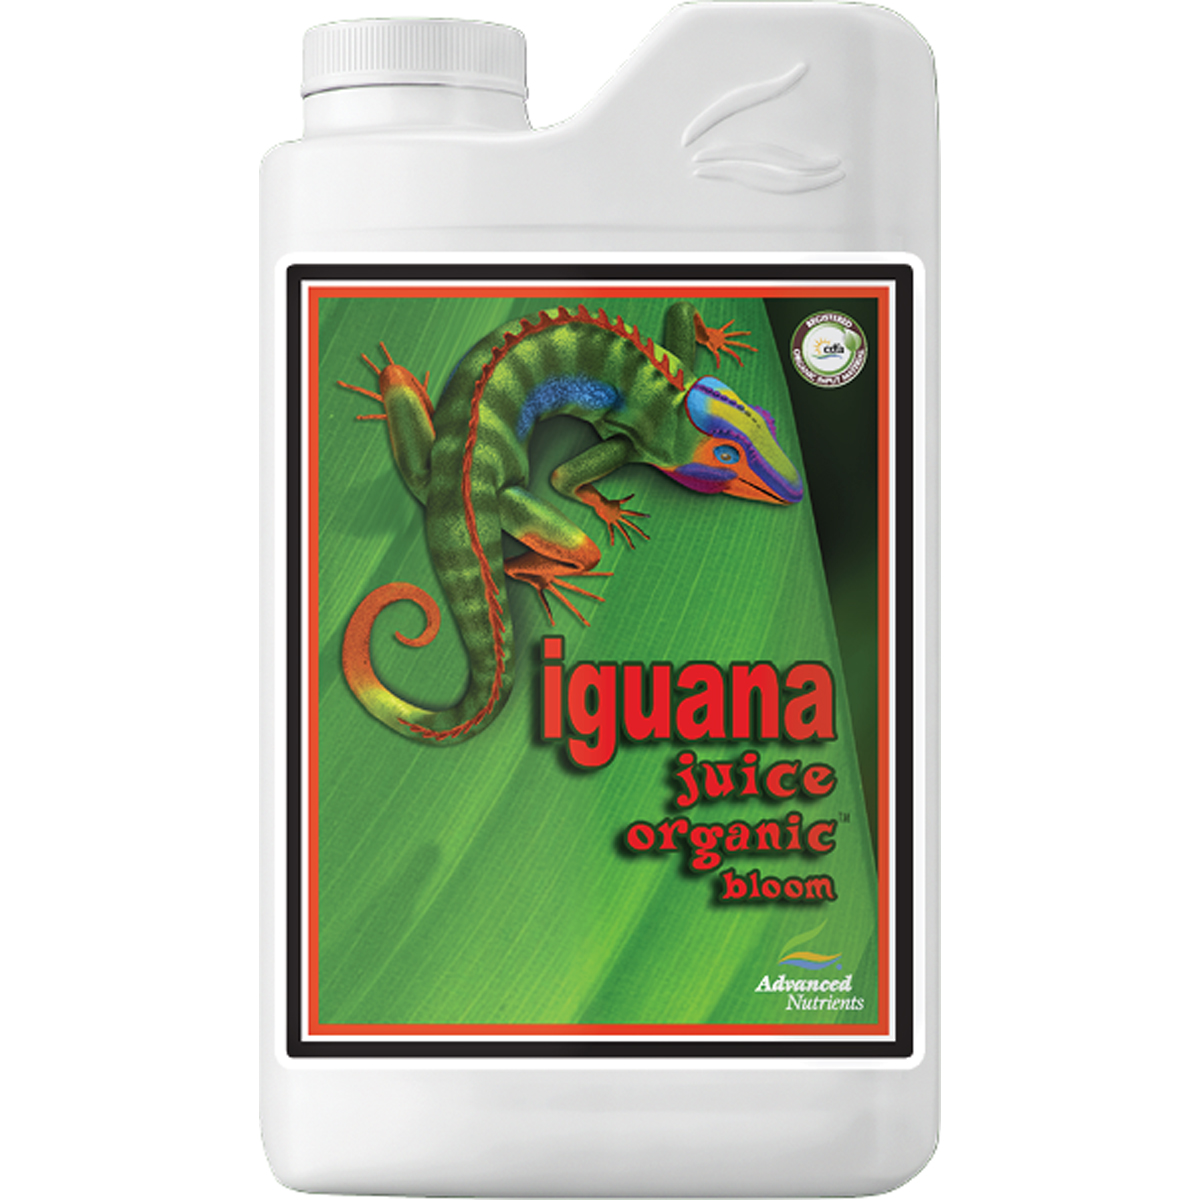 Picture of Iguana Juice Organic Bloom 1 L